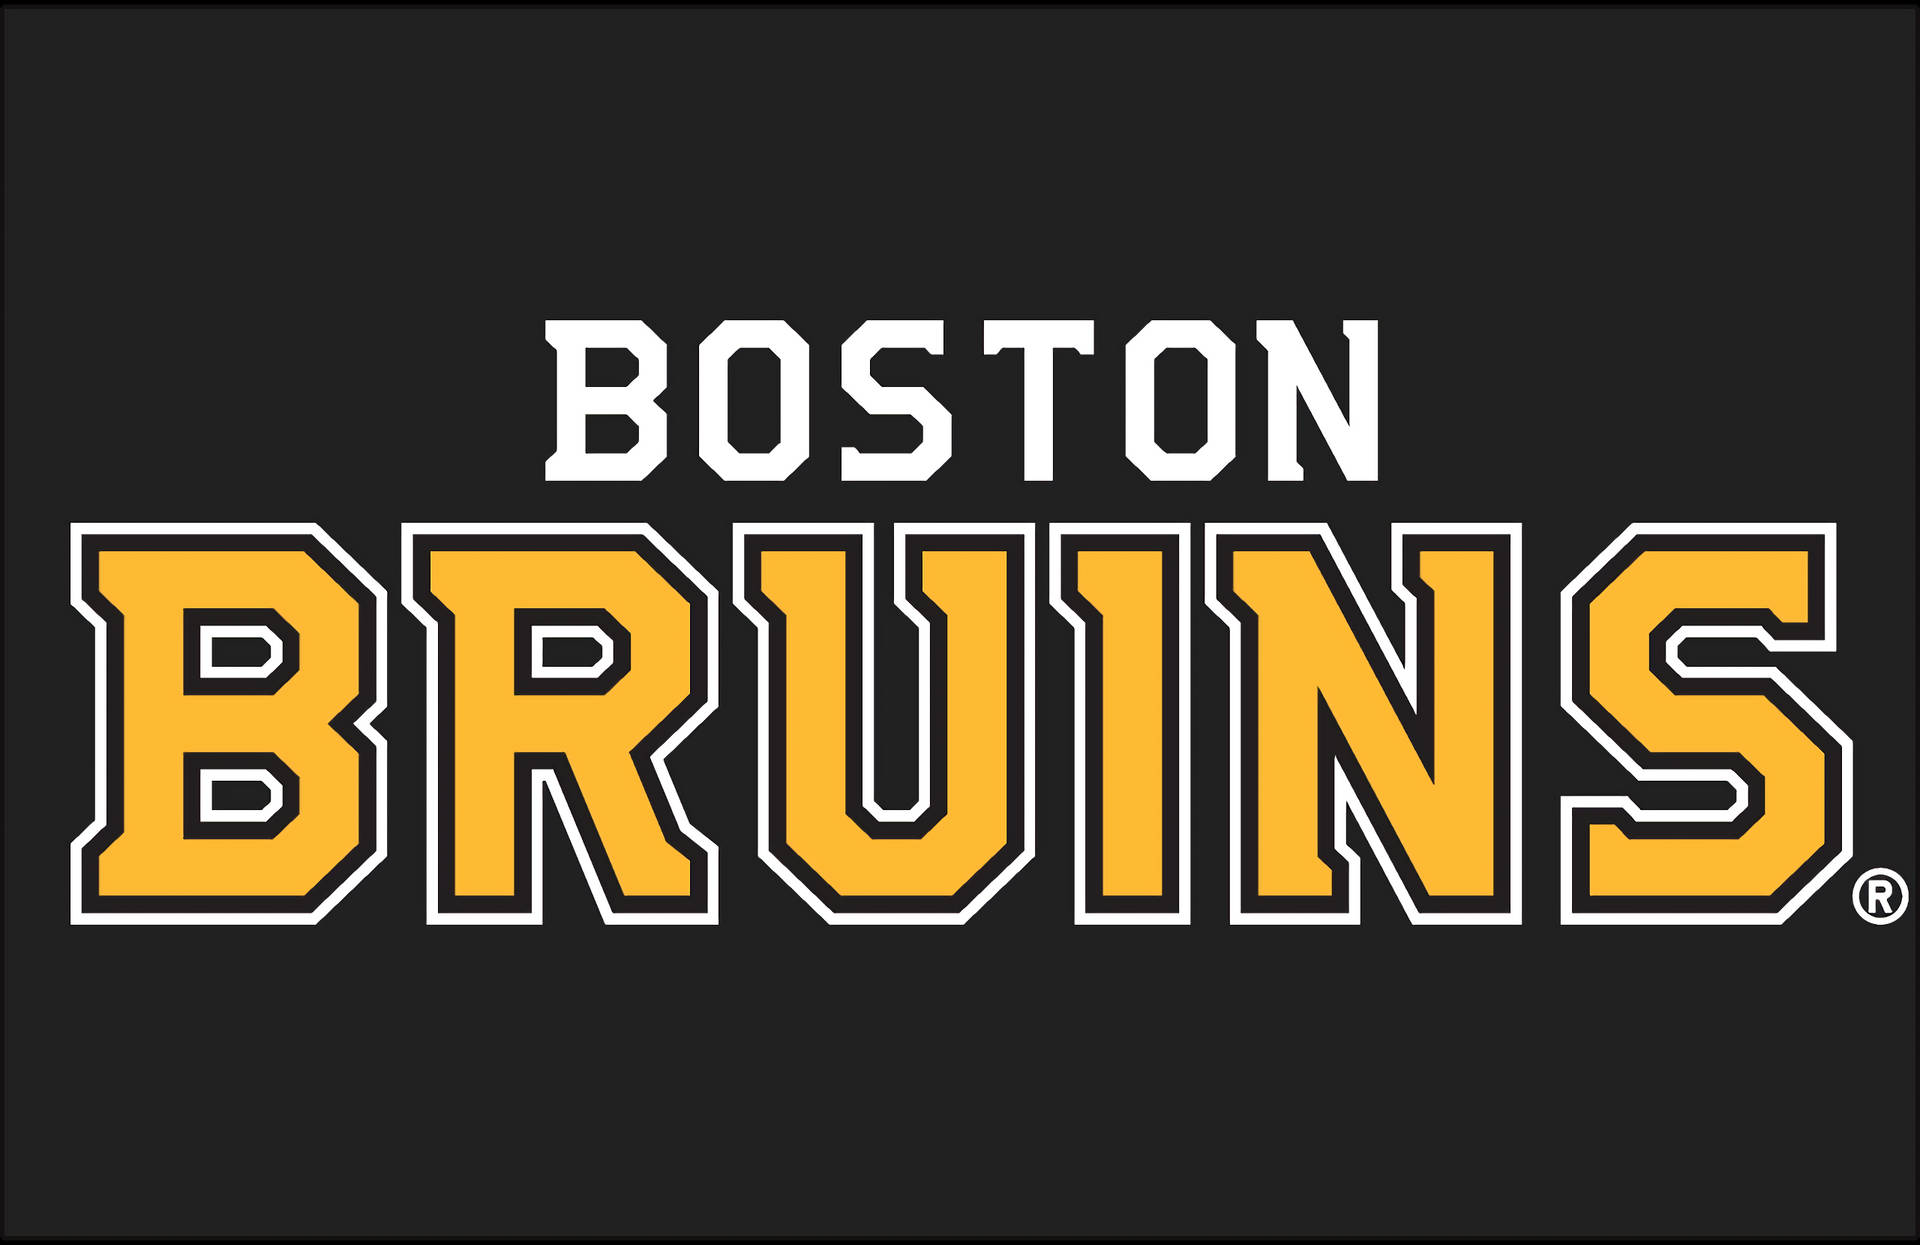 Boston Bruins Text Background